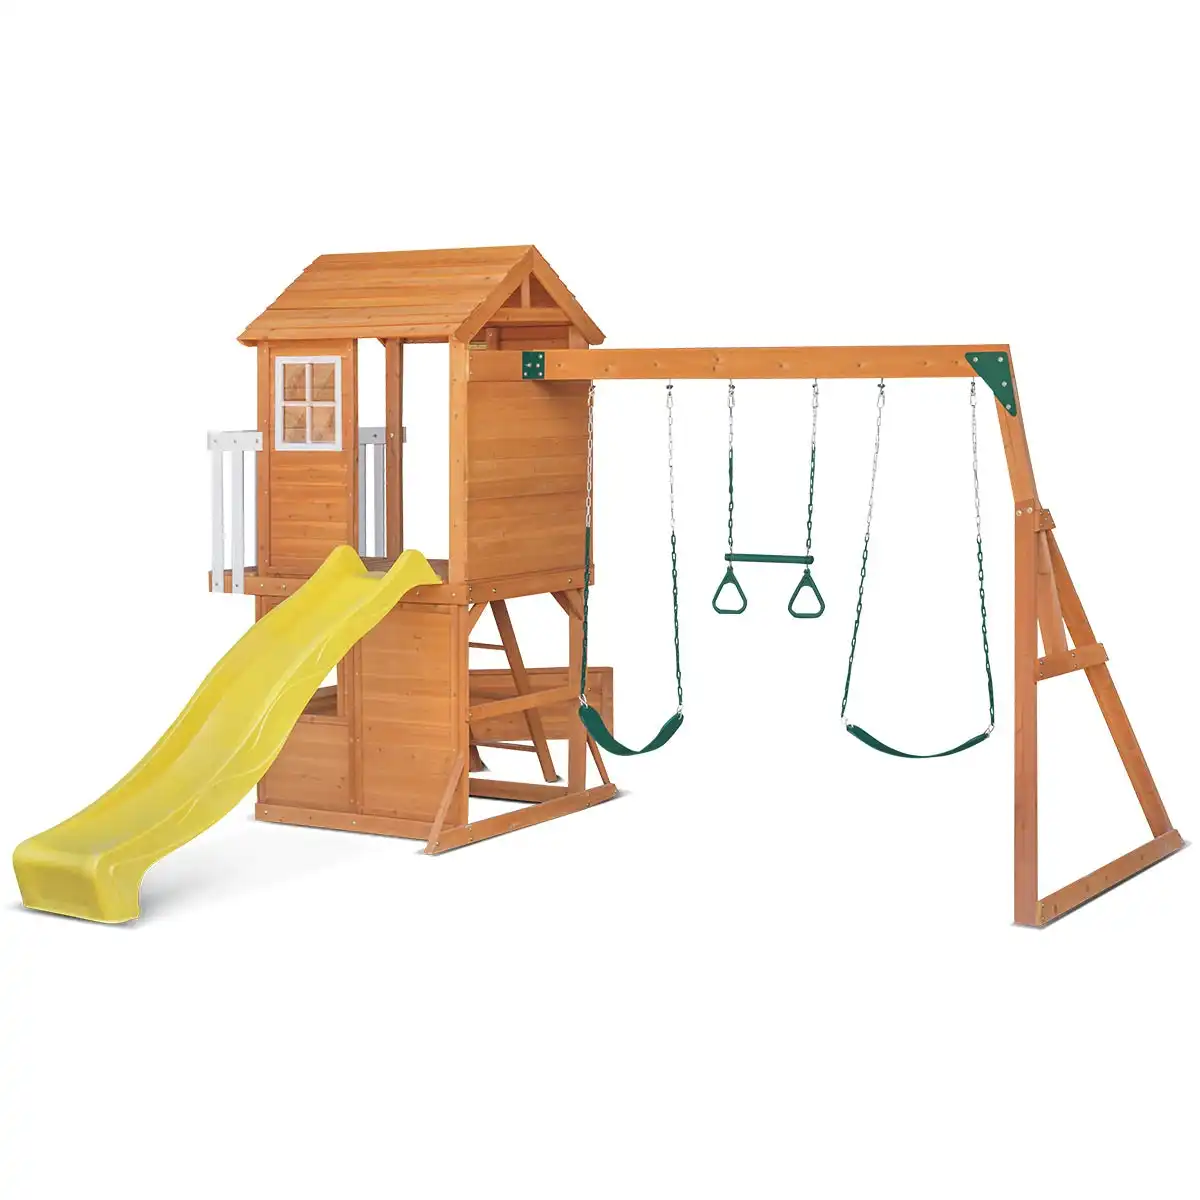 Lifespan Kids Springlake Play Centre in Yellow Slide